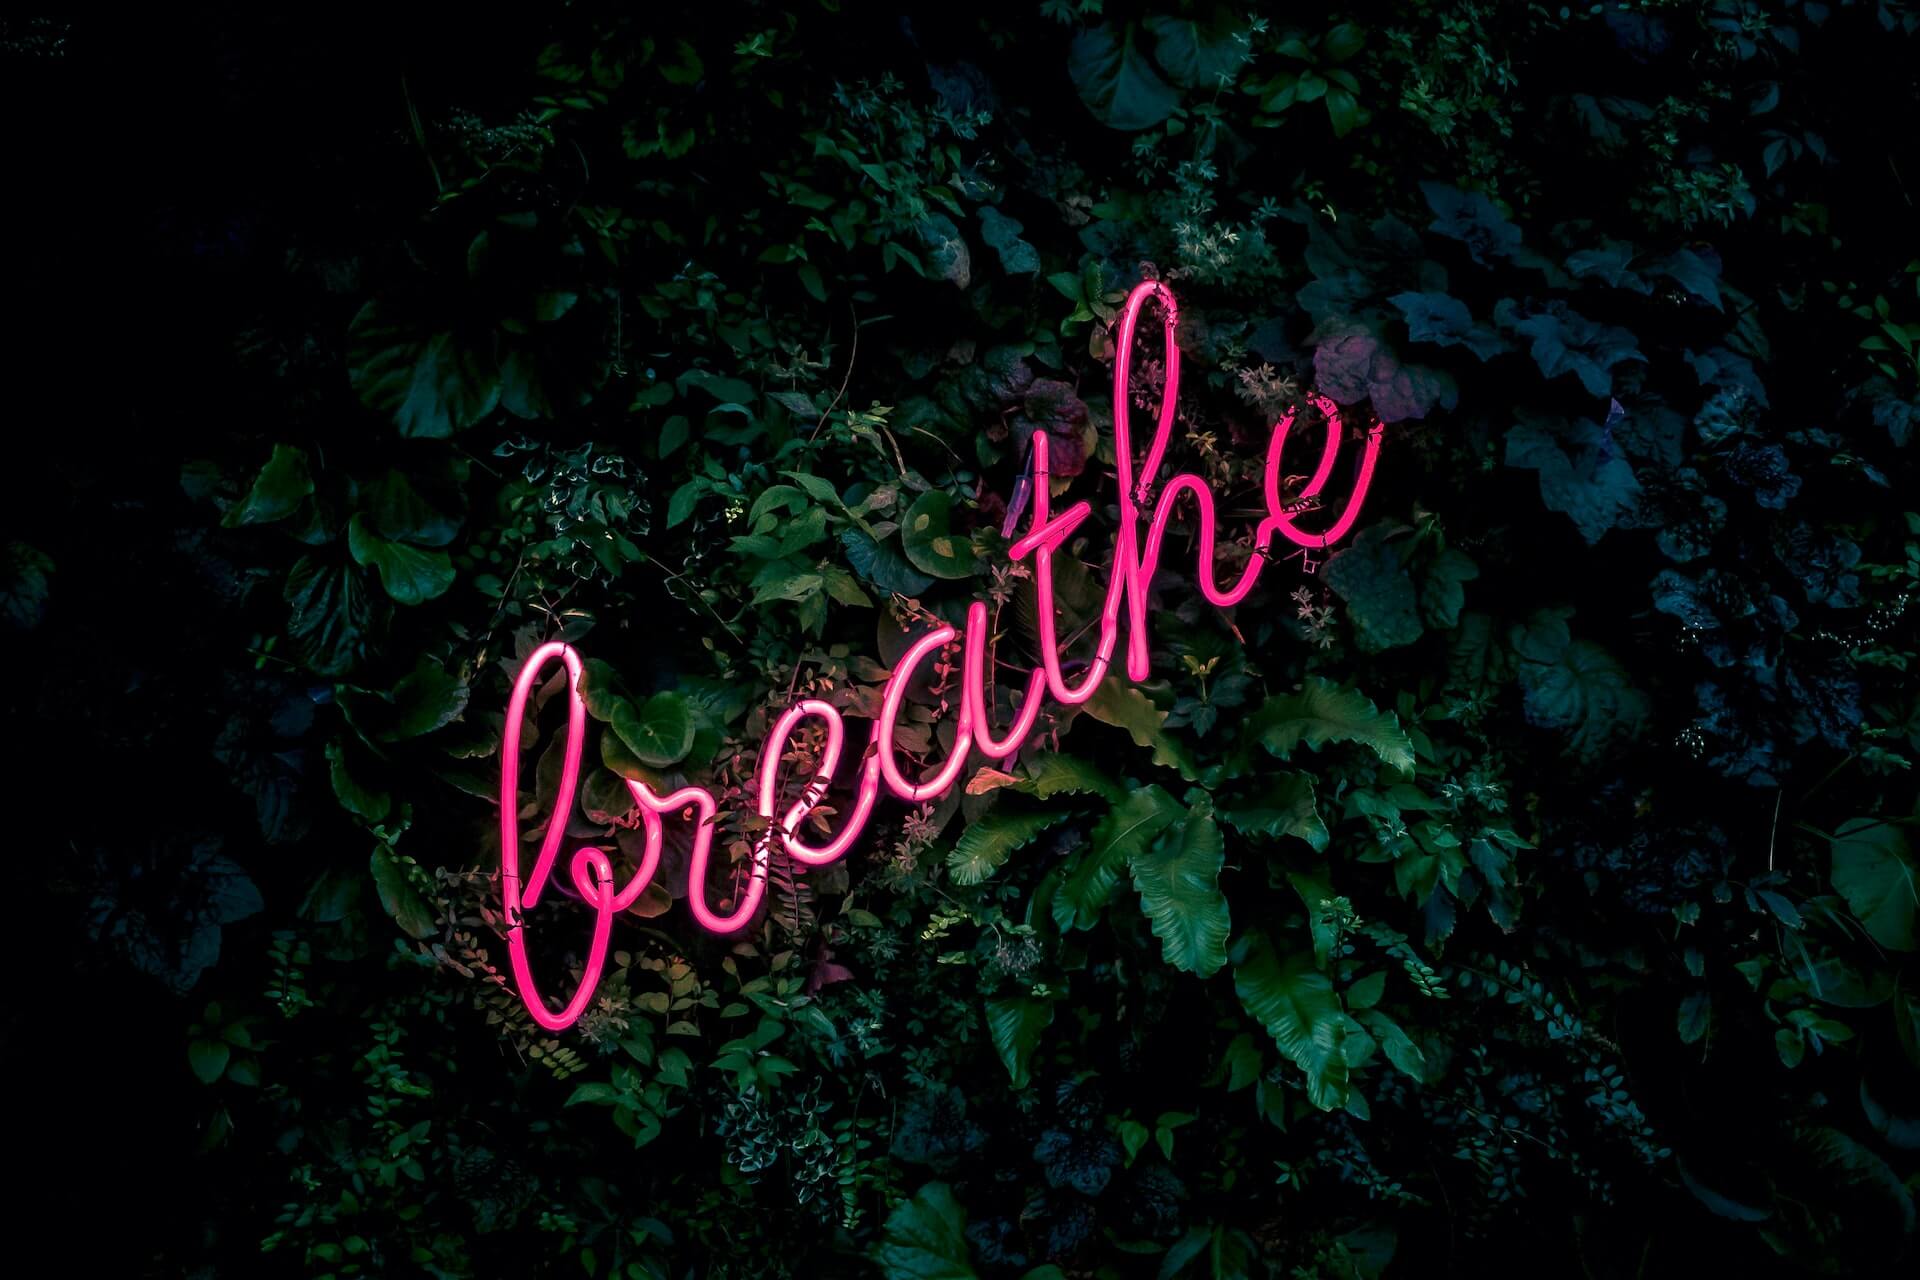 Pink neon "breathe" sign